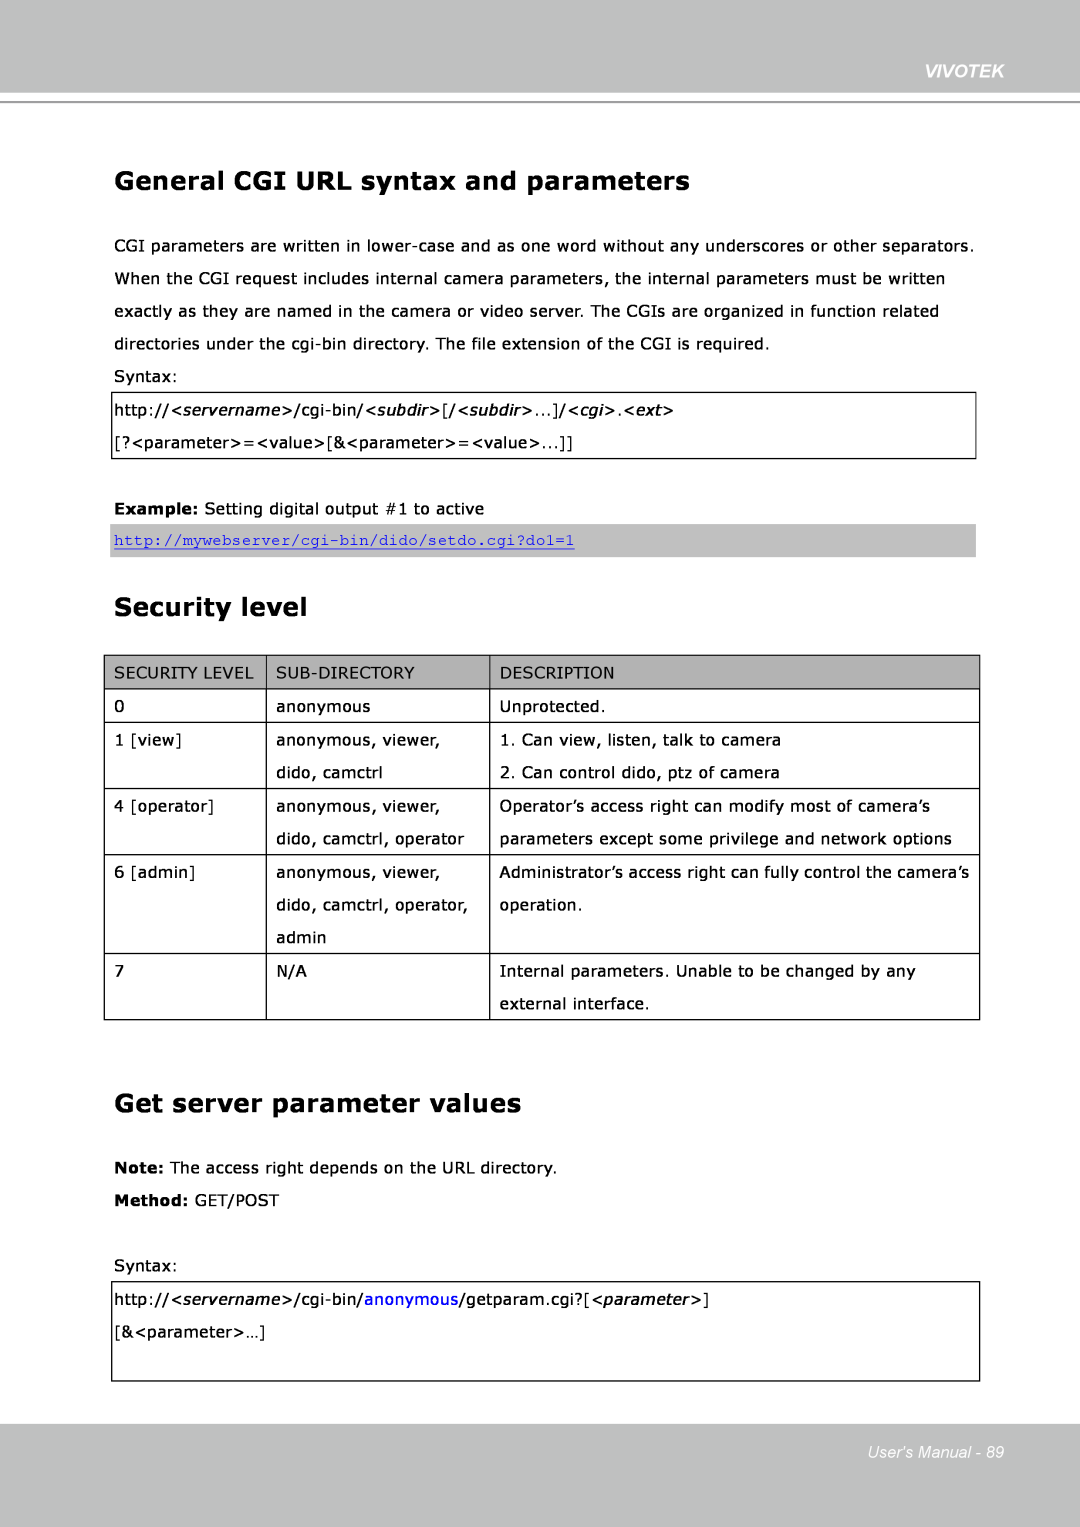 Vivotek PZ7132 General CGI URL syntax and parameters, Security level, Get server parameter values, Vivotek, Users Manual 